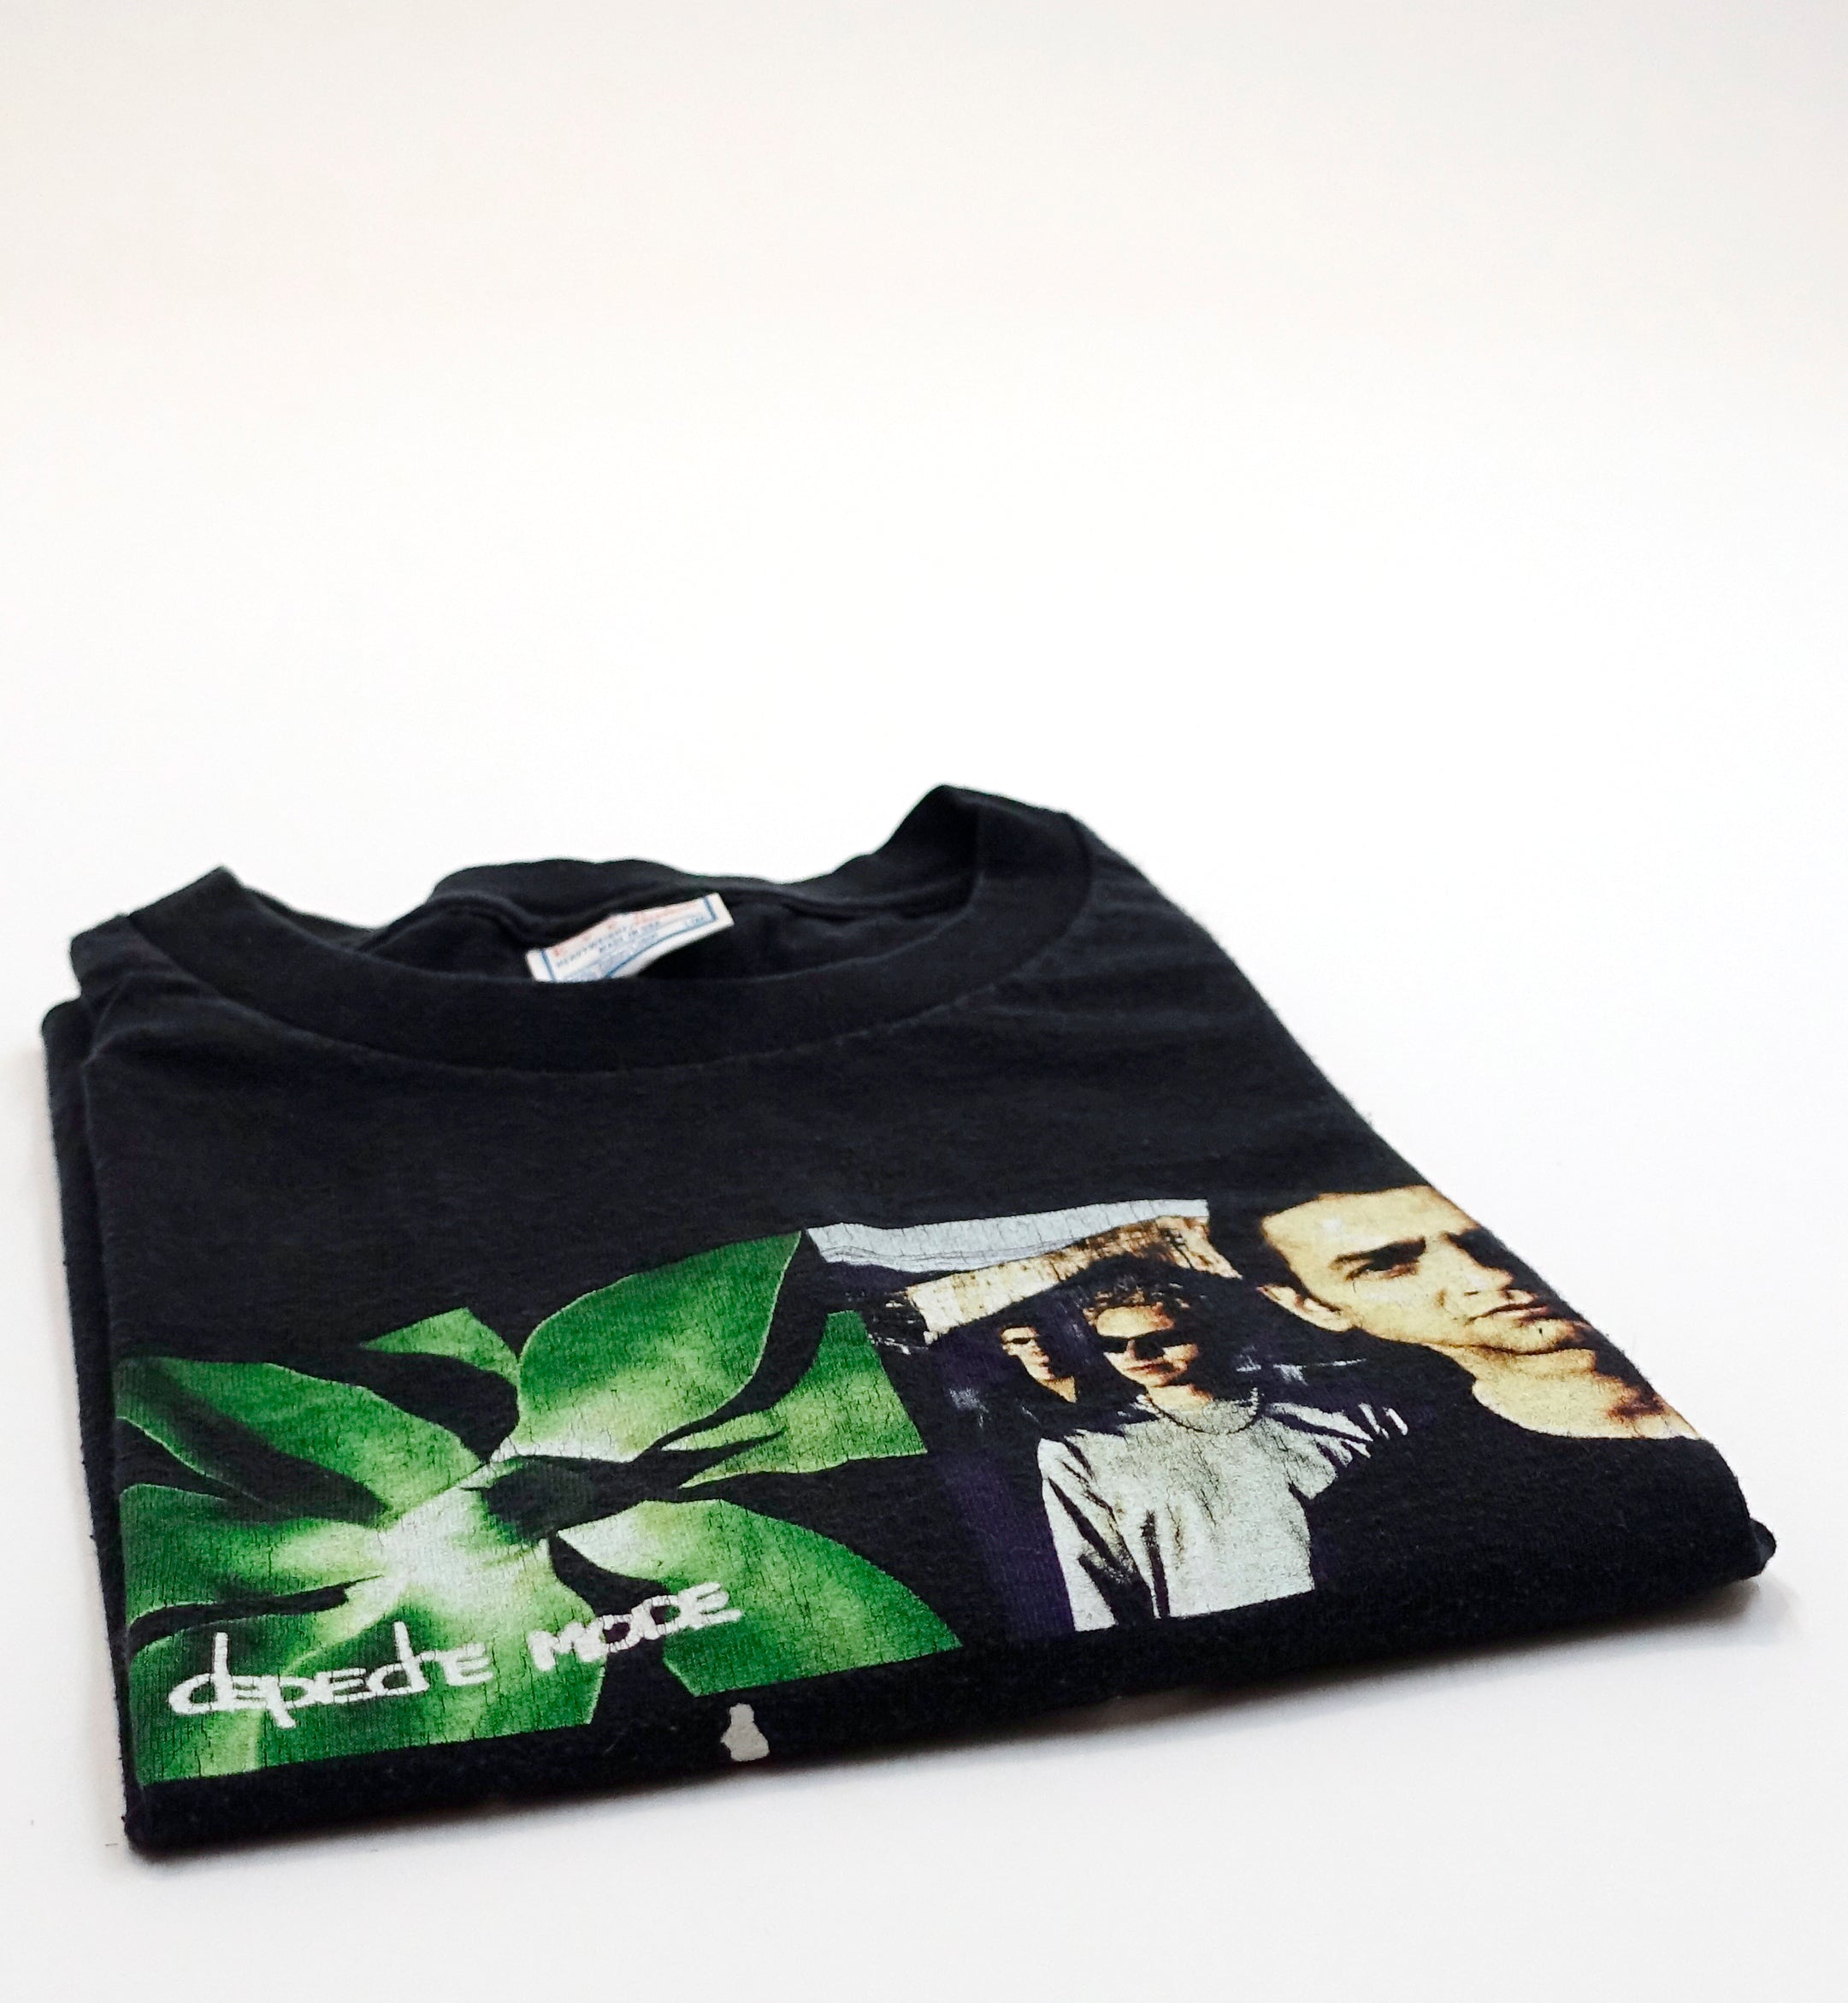 Depeche Mode – Exciter 2001 Tour Shirt Size Large